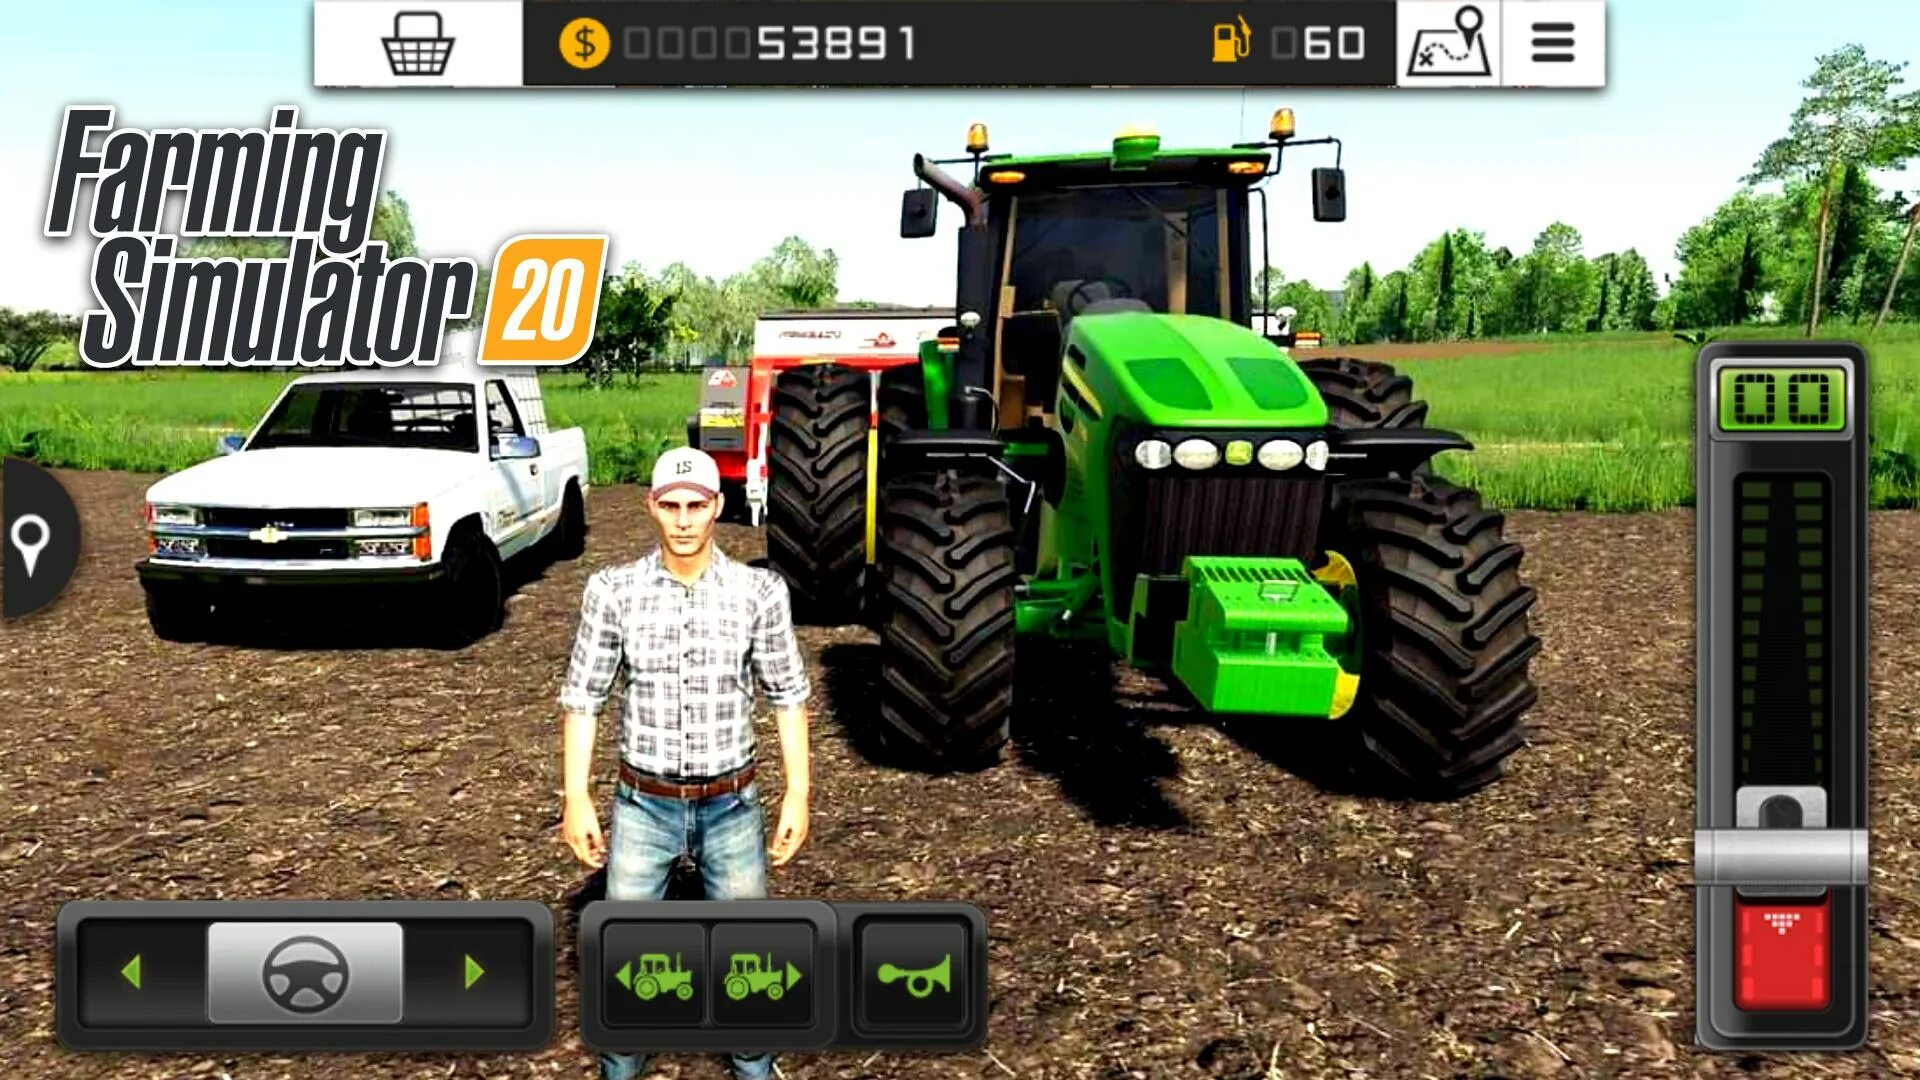 Фермер симулятор 20. Ферма симулятор 2020. Симулятор тракториста 20. Farming Simulator 2020 mobile. Игры ферма мод на деньги